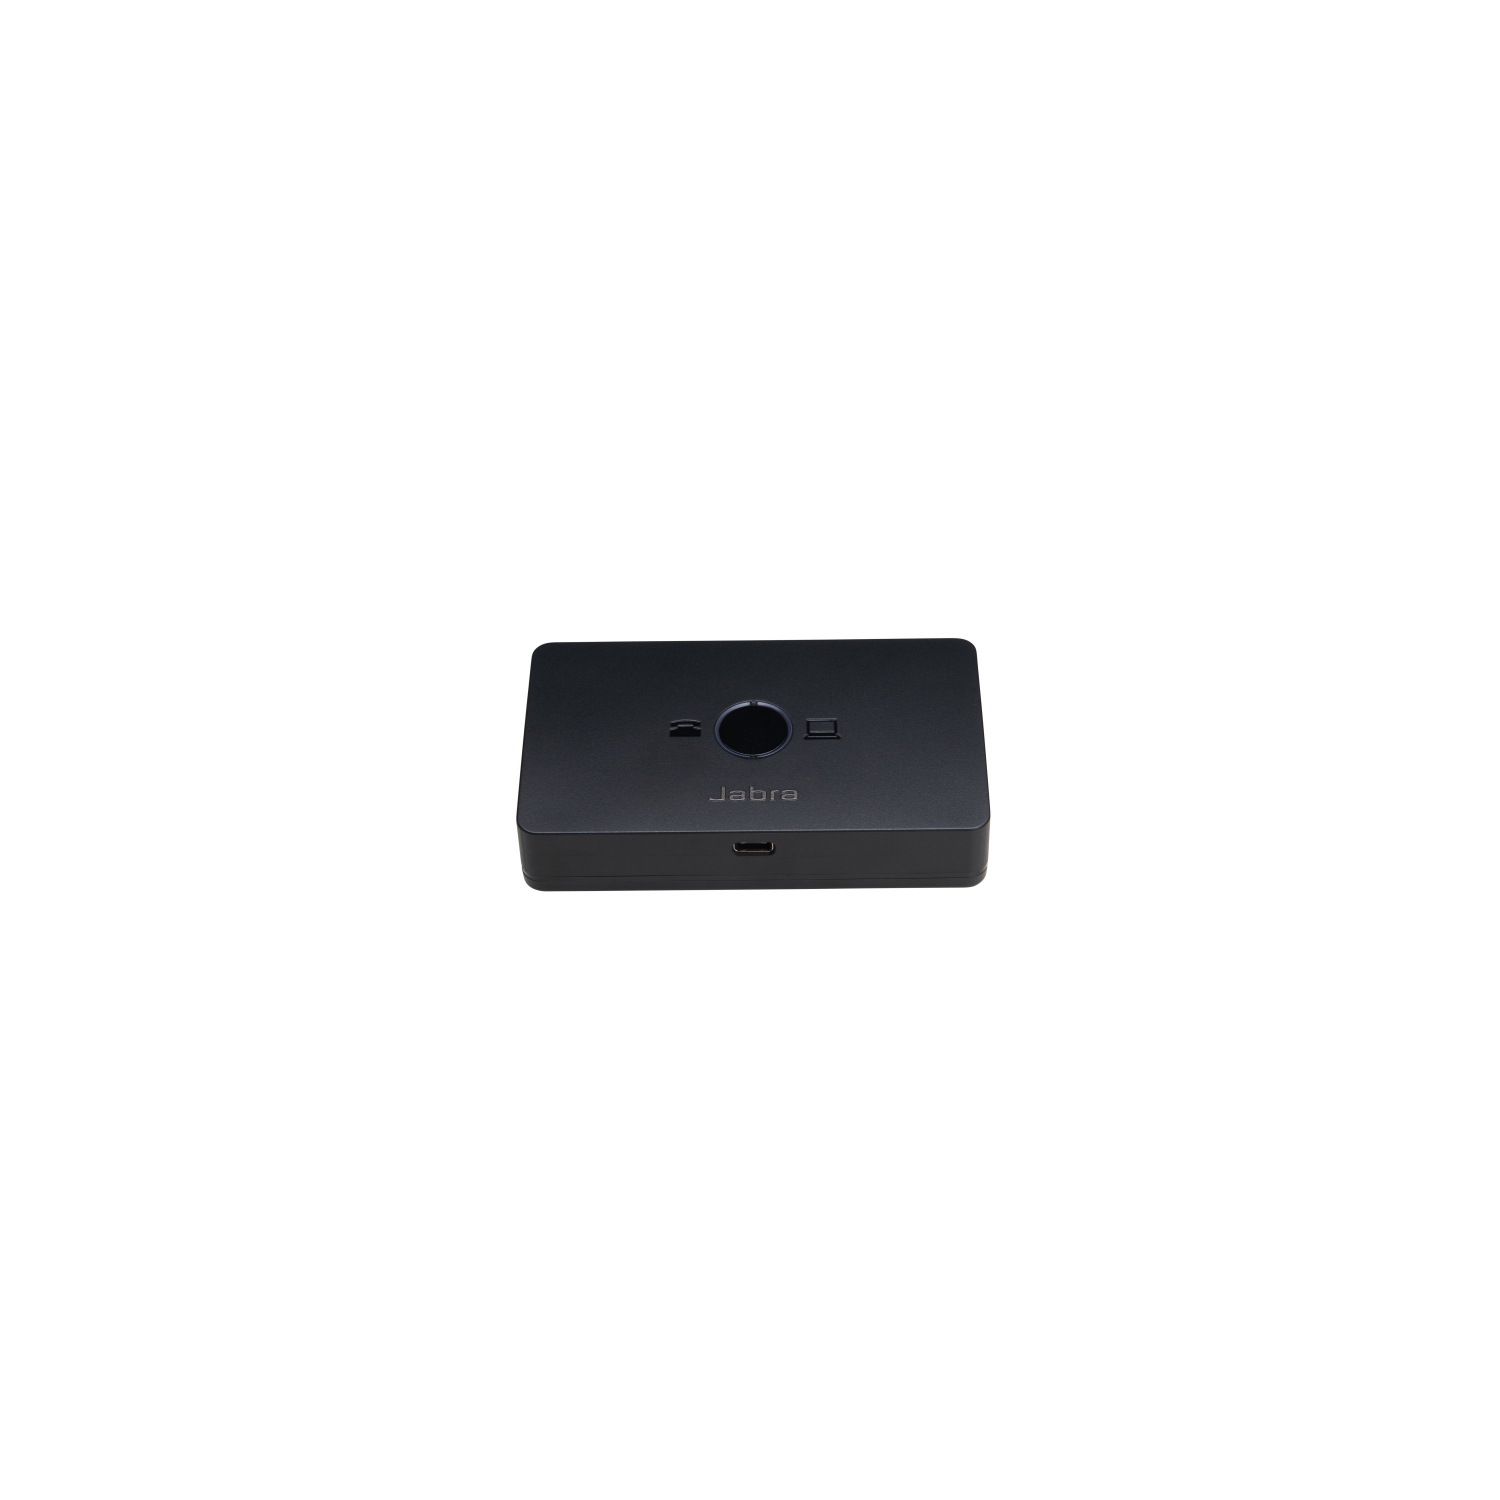 Jabra Link 950 Audio Processor for Phone - Black - (2950-79)